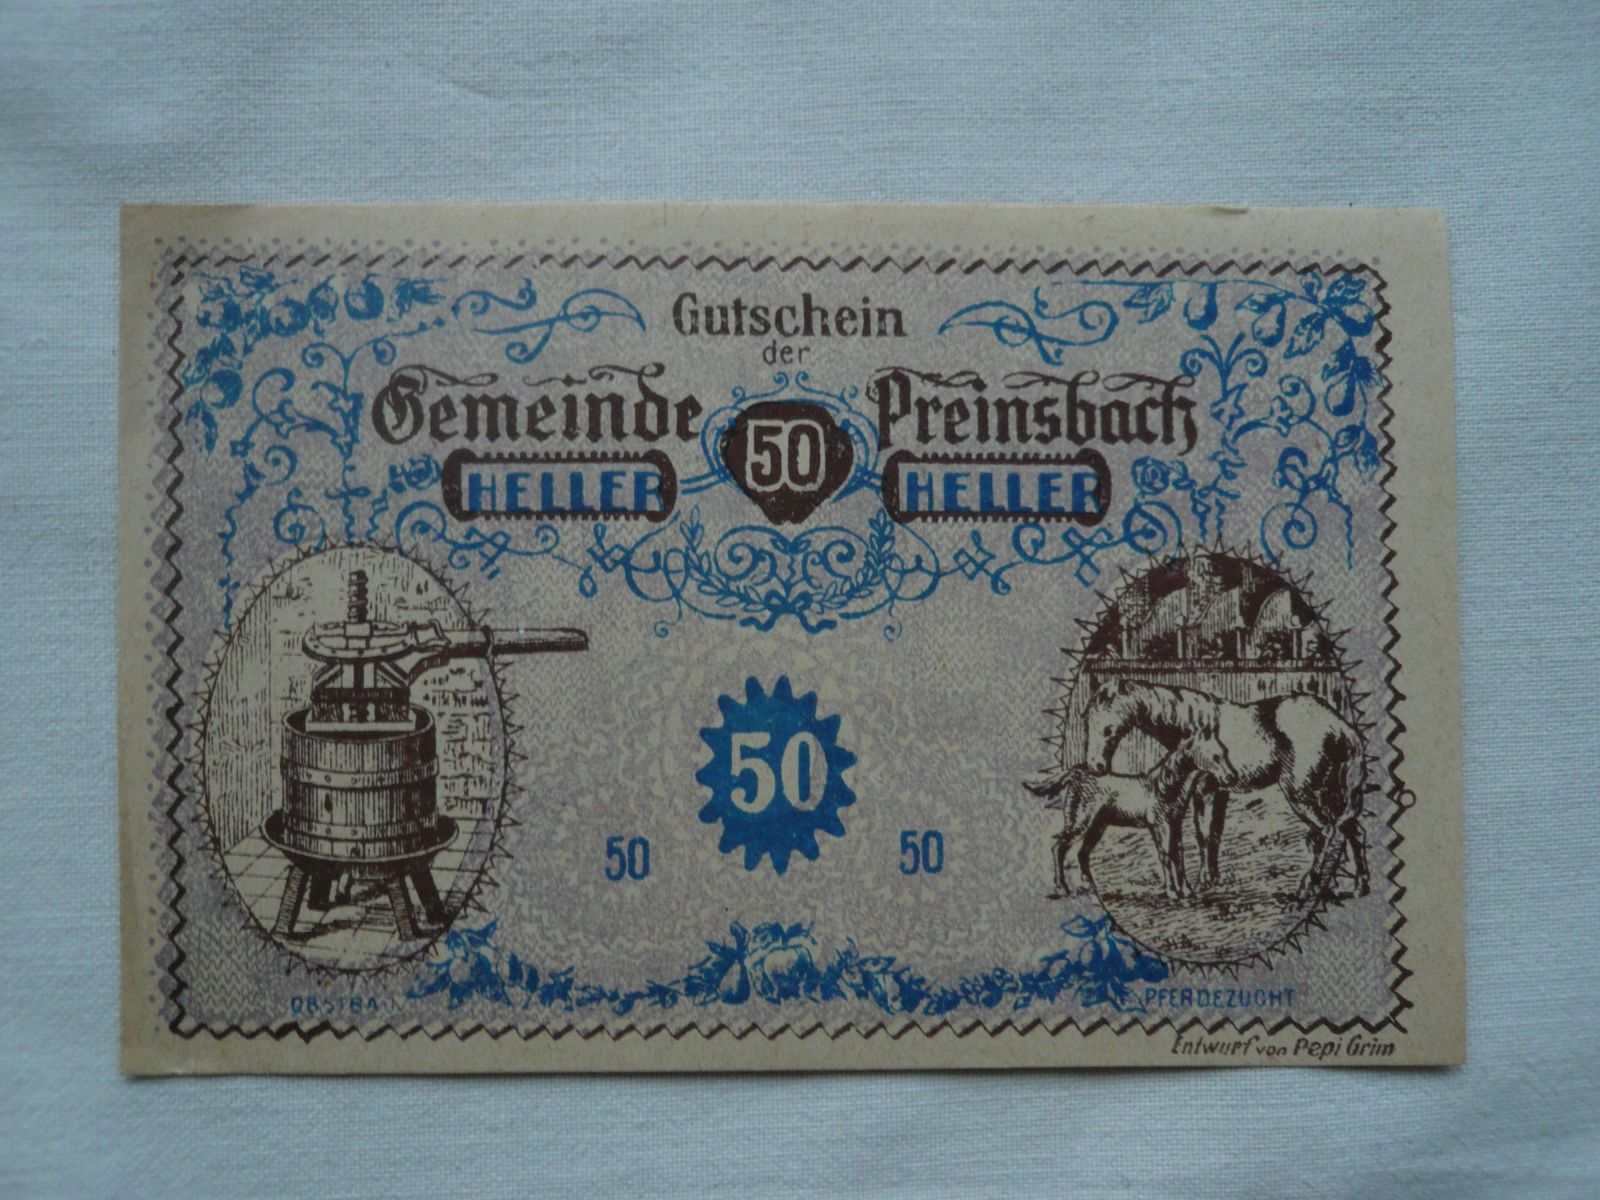 50 Heller, Preinsbach, 1920 Rakousko